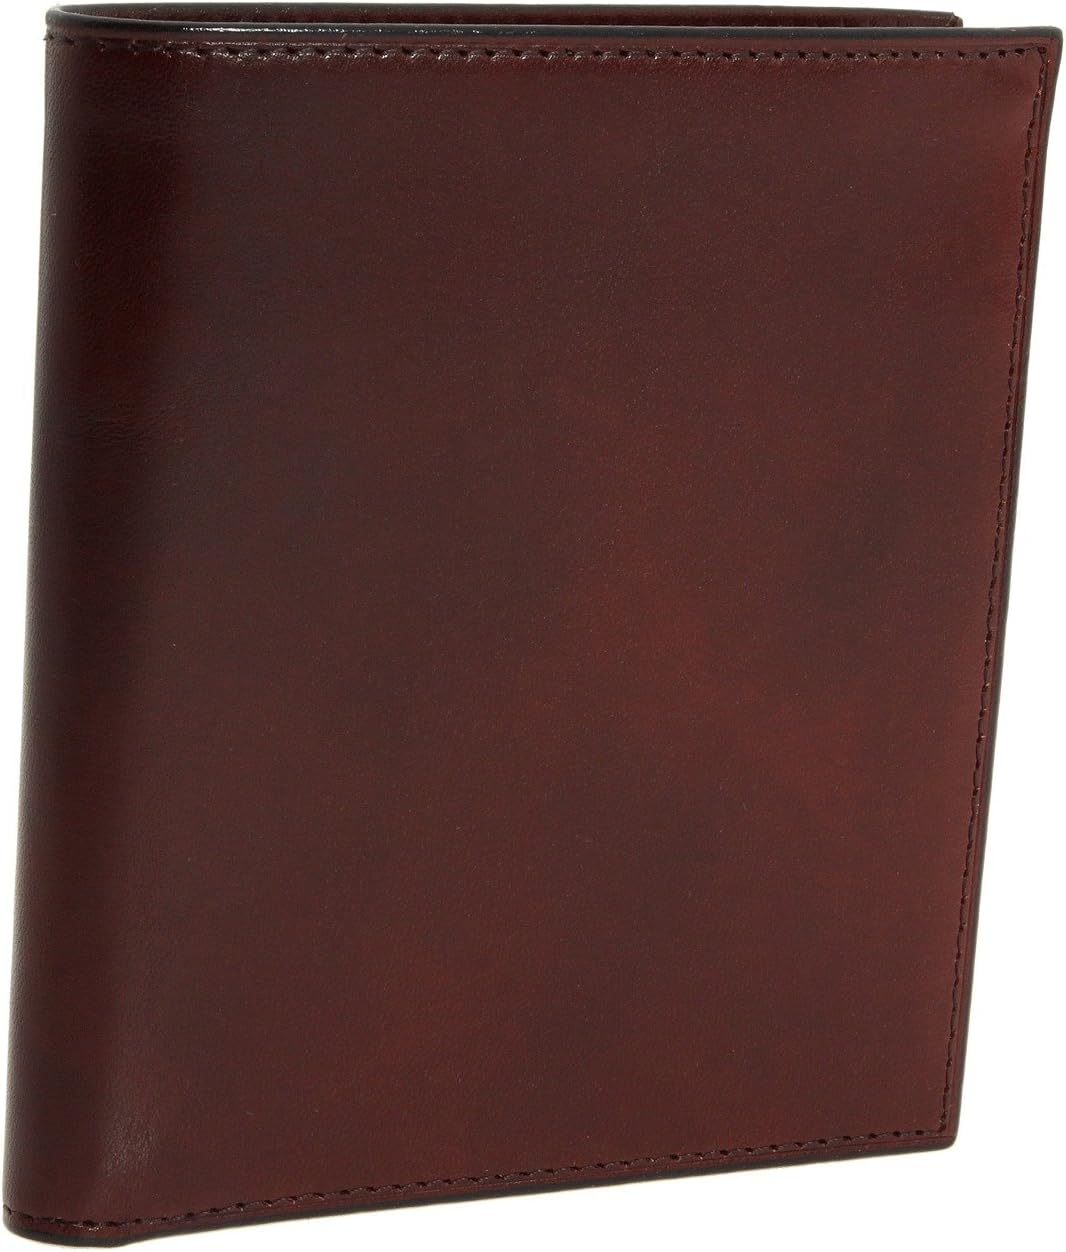 Коллекция Old Leather — кредитный кошелек с 12 карманами Bosca, цвет Dark Brown Leather